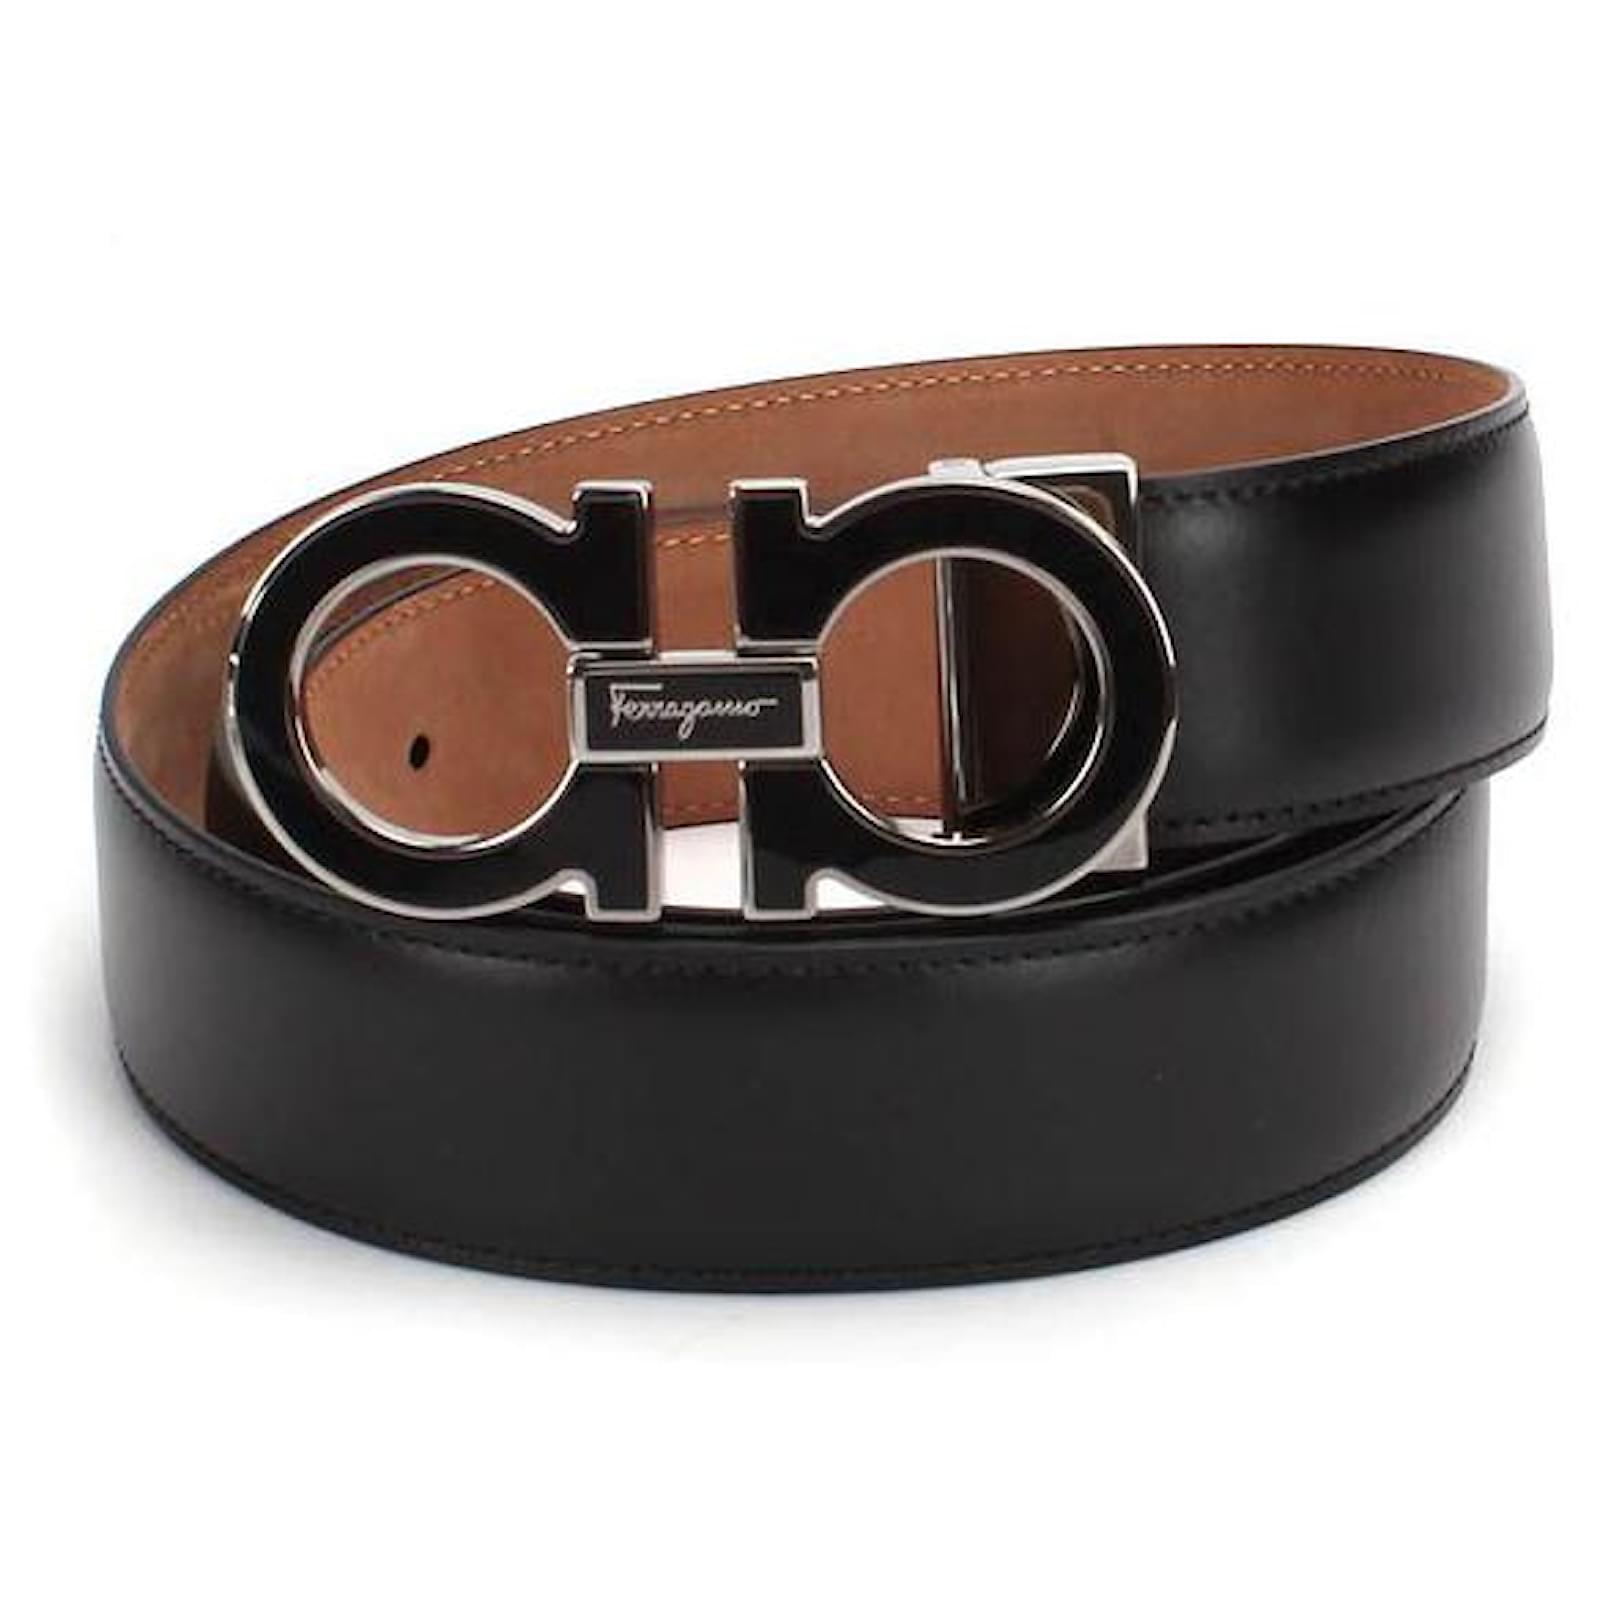  Gancini Black Leather Belt